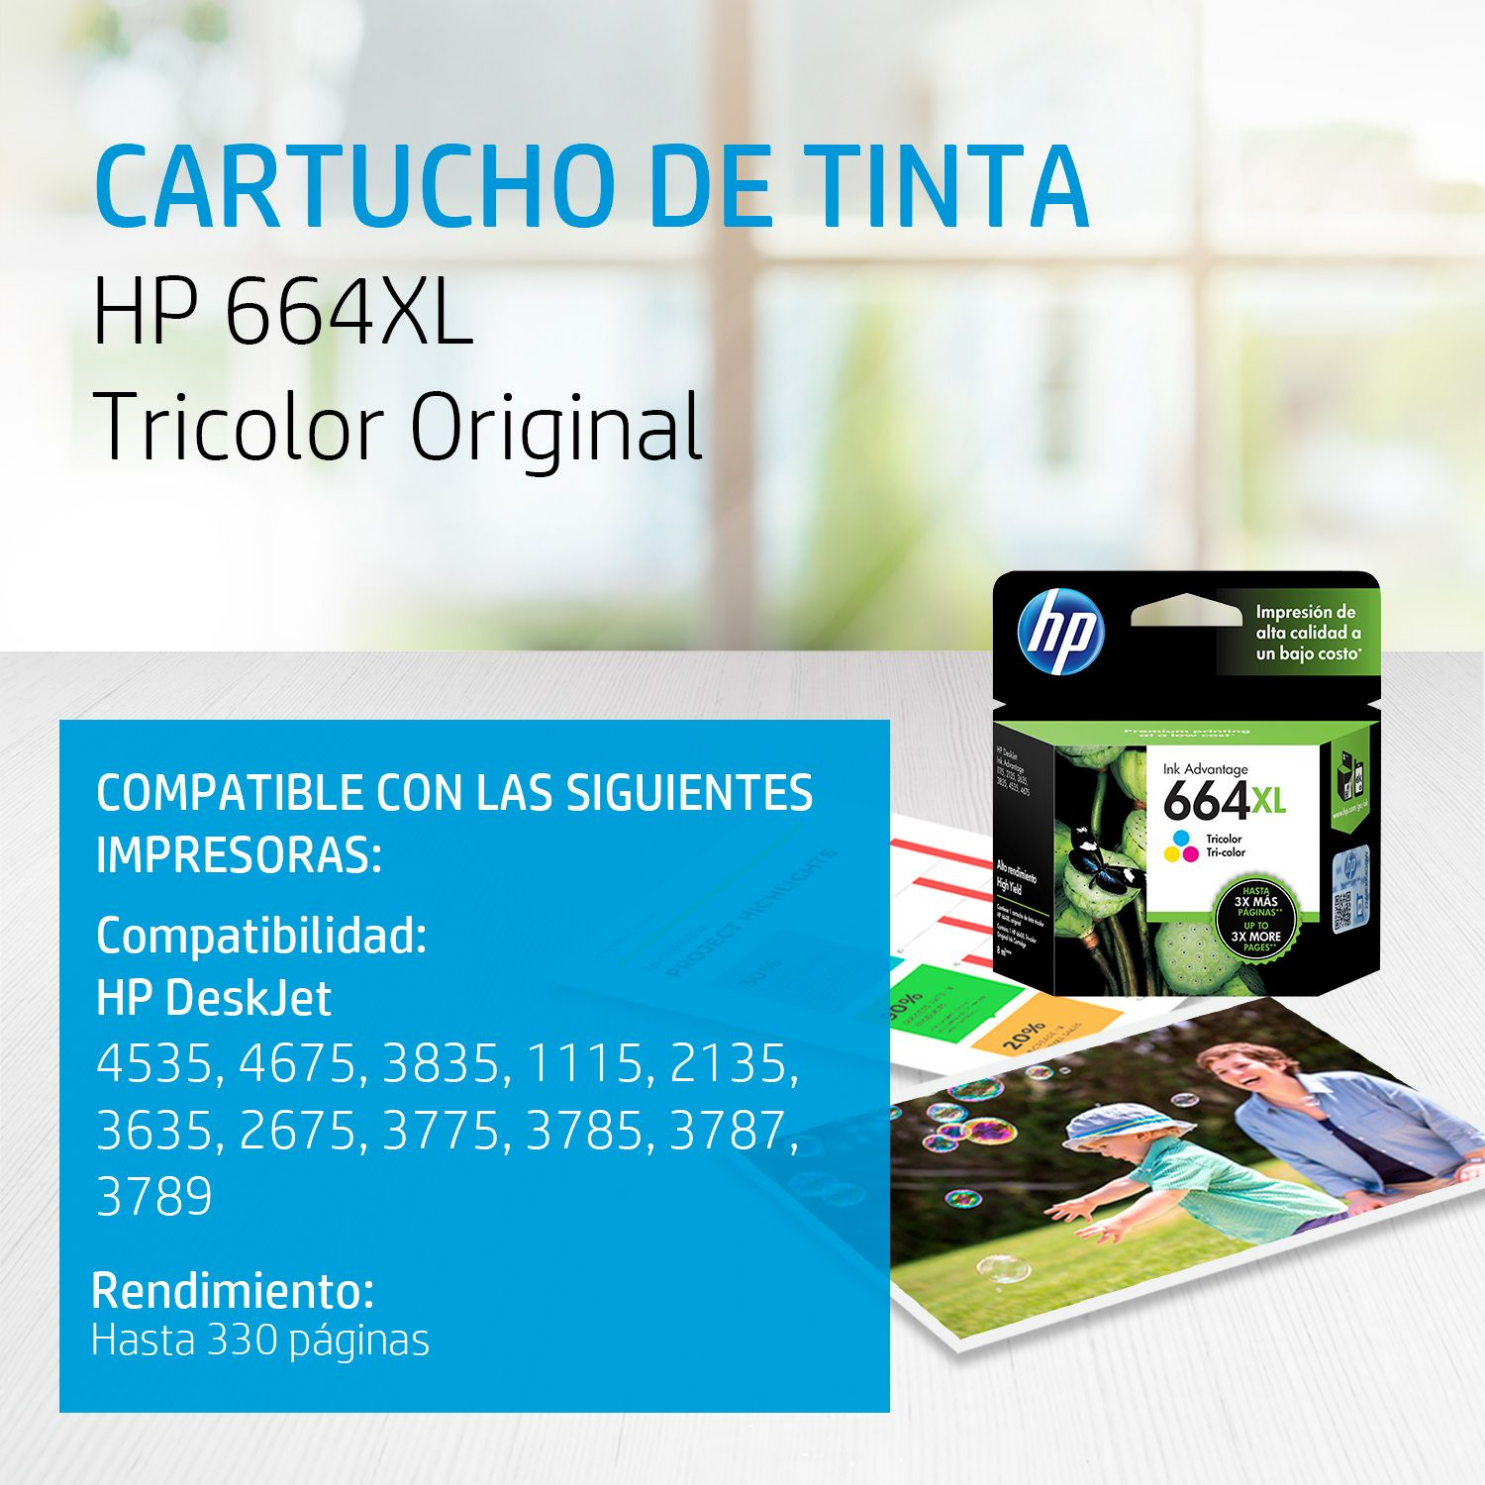 Cartucho de tinta HP 664XL Tricolor (F6V30AL) DeskJet 1115, 2135, 4535, 4675, 330 Pag.